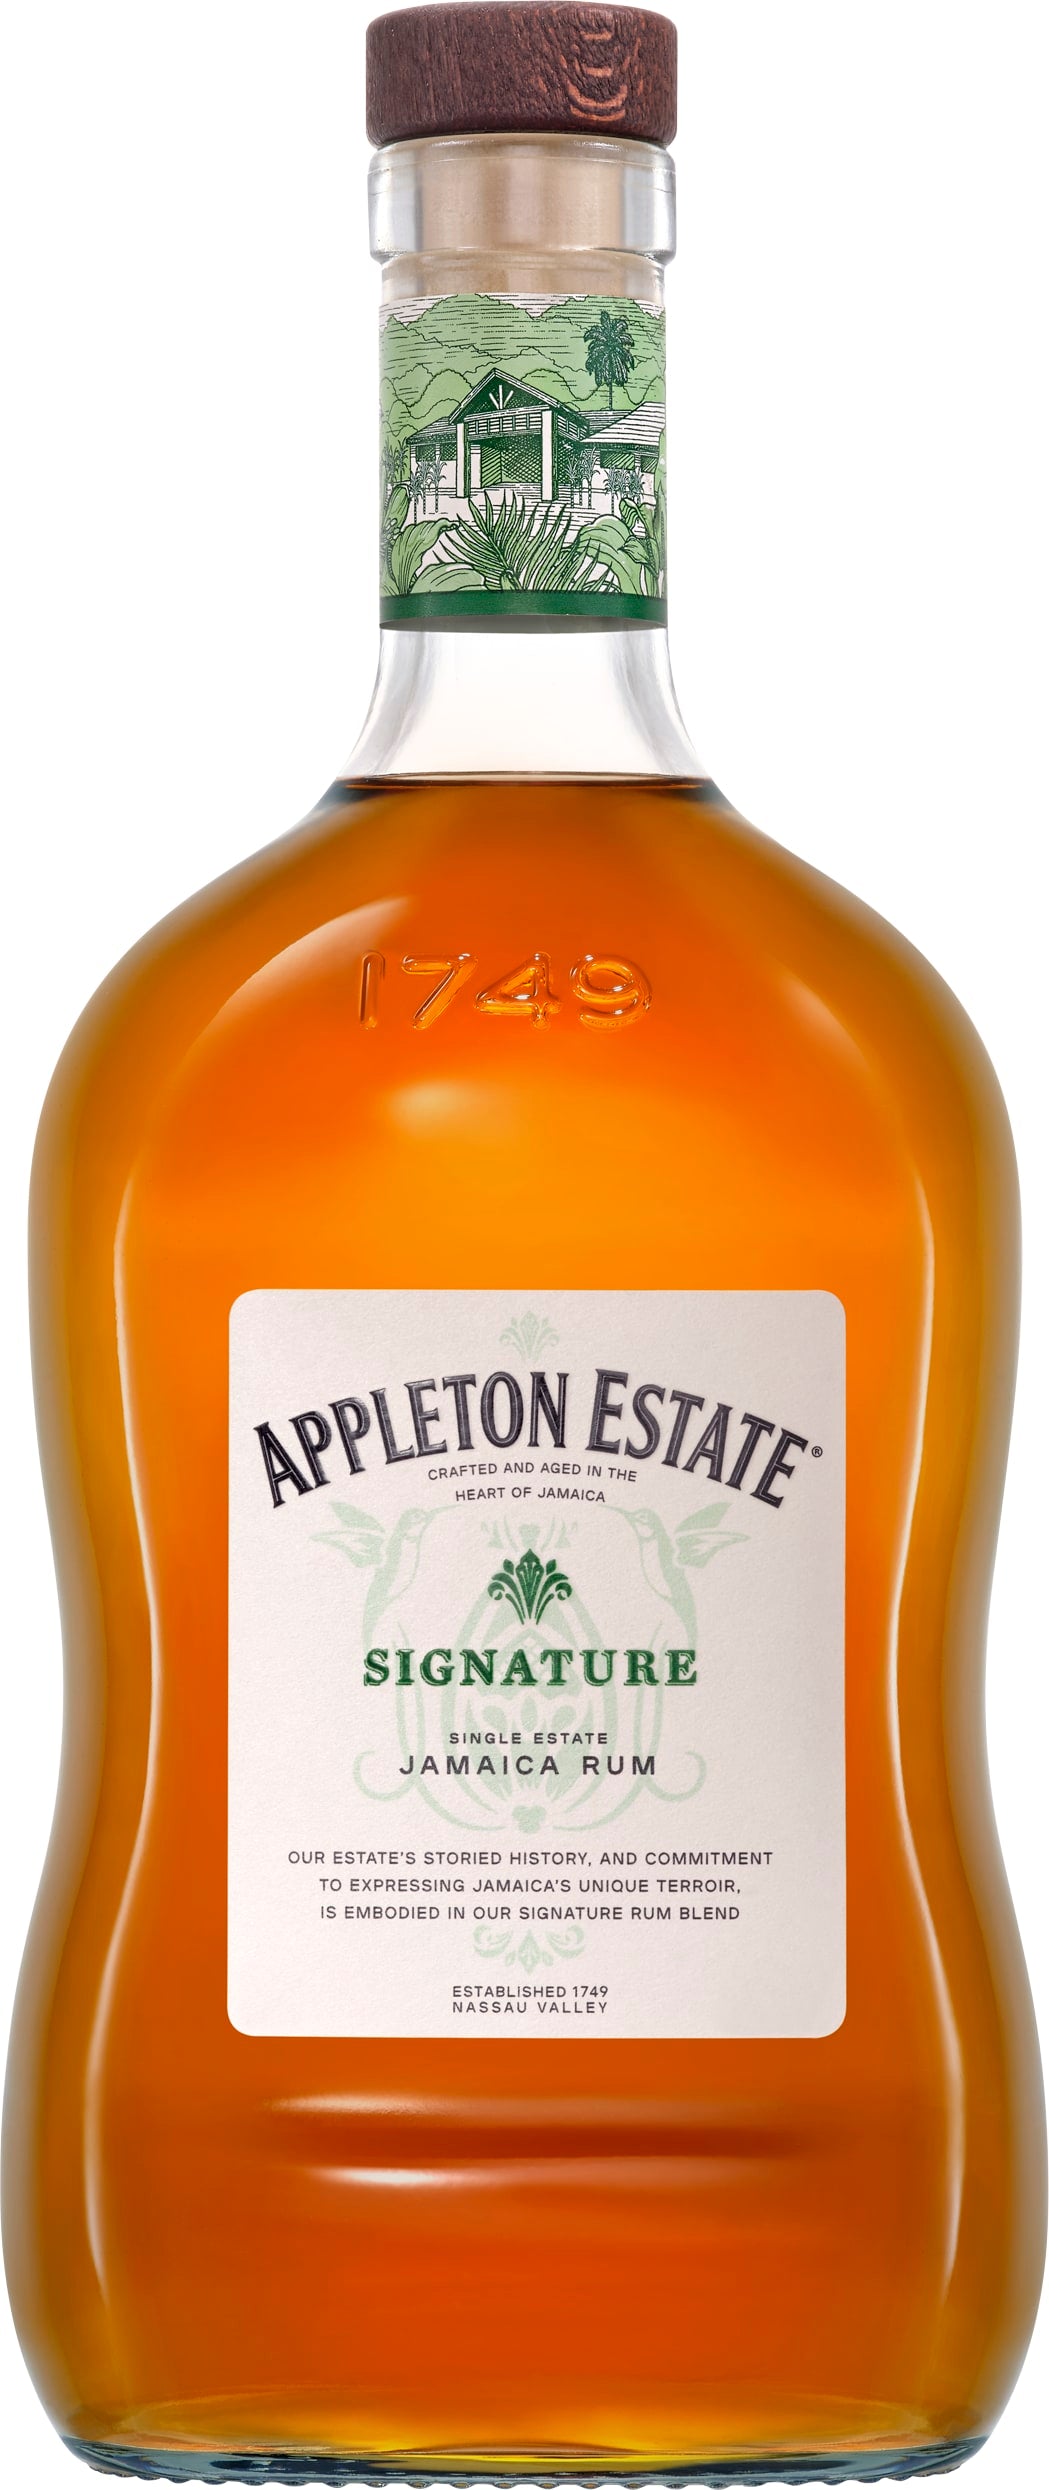 Appleton Estate Signature Rum 70cl NV - Buy Appleton Estate Wines from GREAT WINES DIRECT wine shop